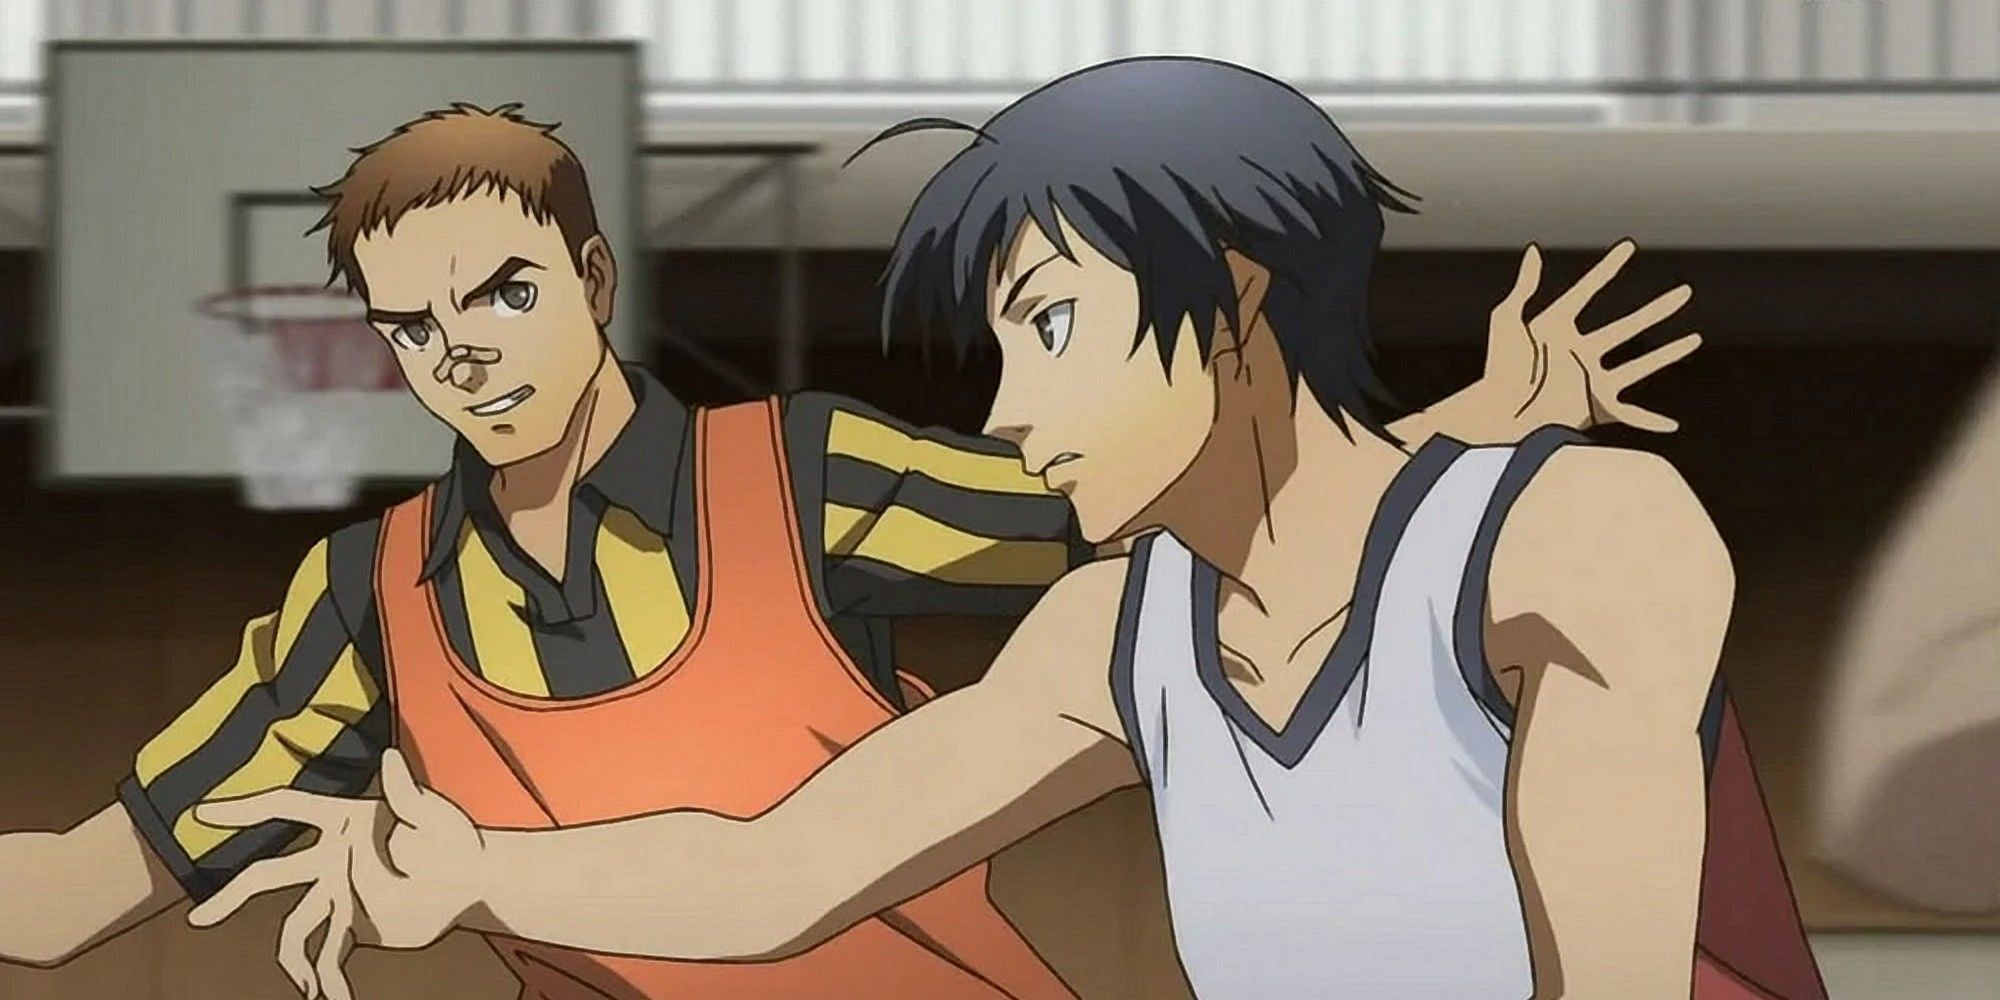 Daisuke and Kou playing basketball from Persona 4 Golden